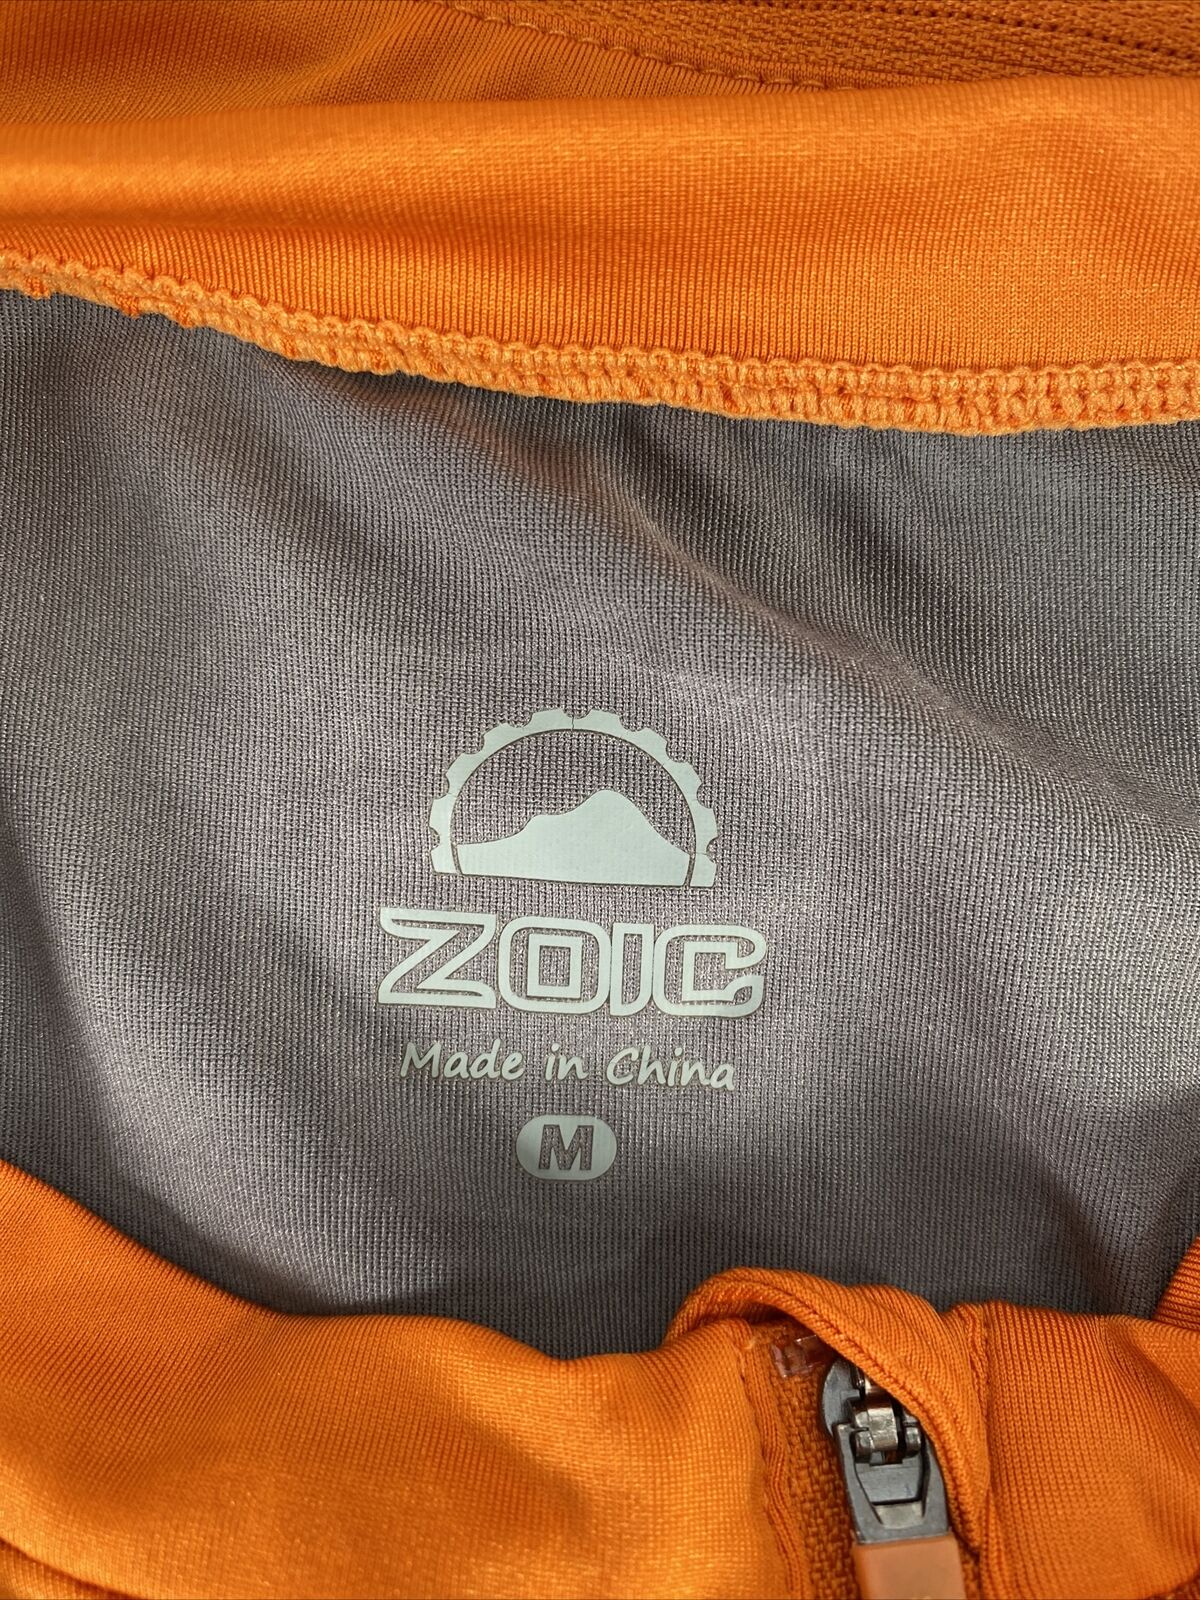 Zoic Women's Orange Polyester 1/2 Zip Cycling Shirt Jersey - M